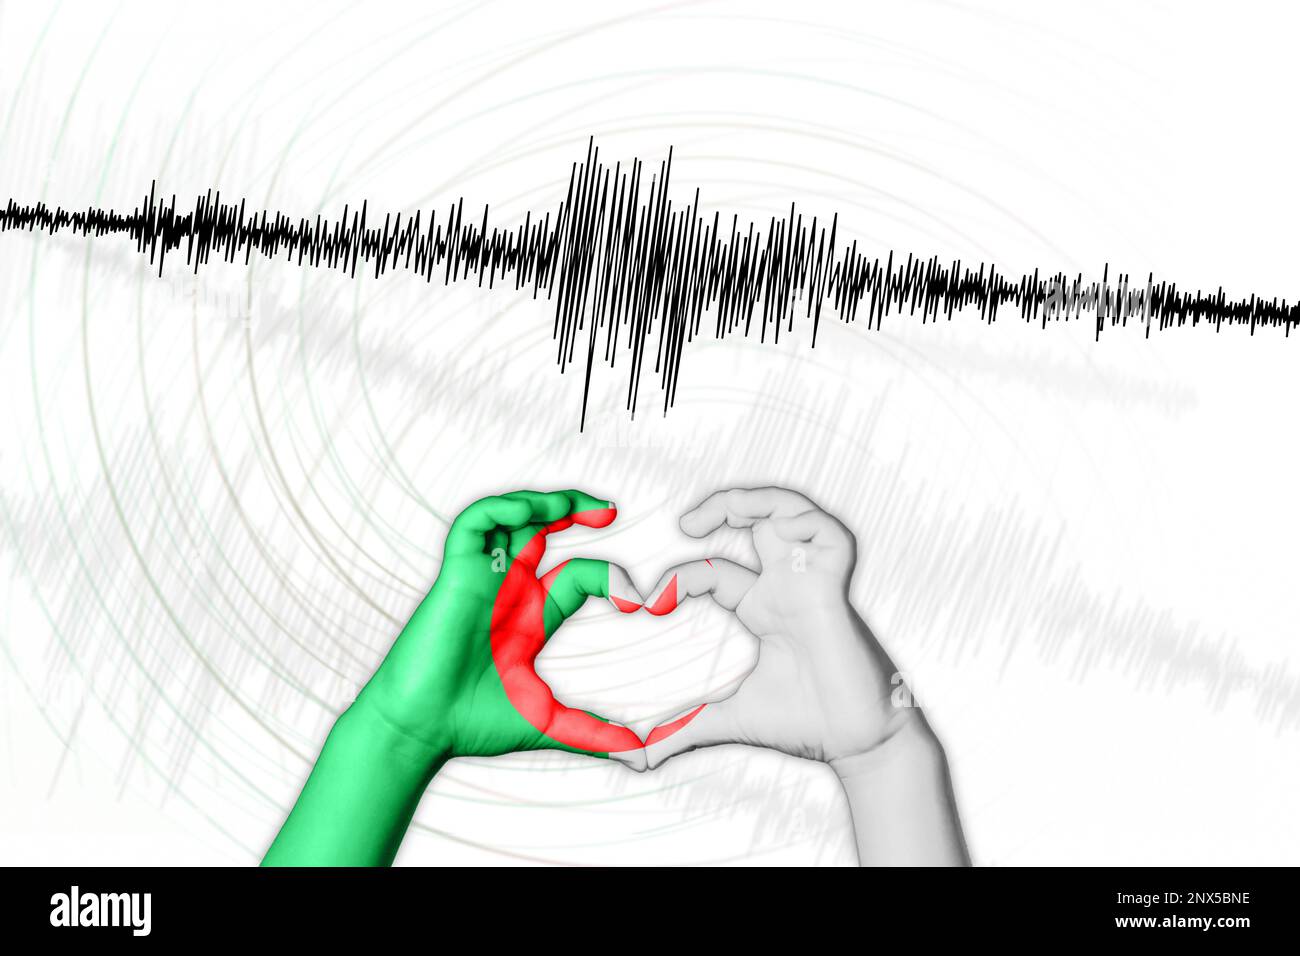 Seismic activity earthquake Algeria symbol of heart Richter scale Stock Photo